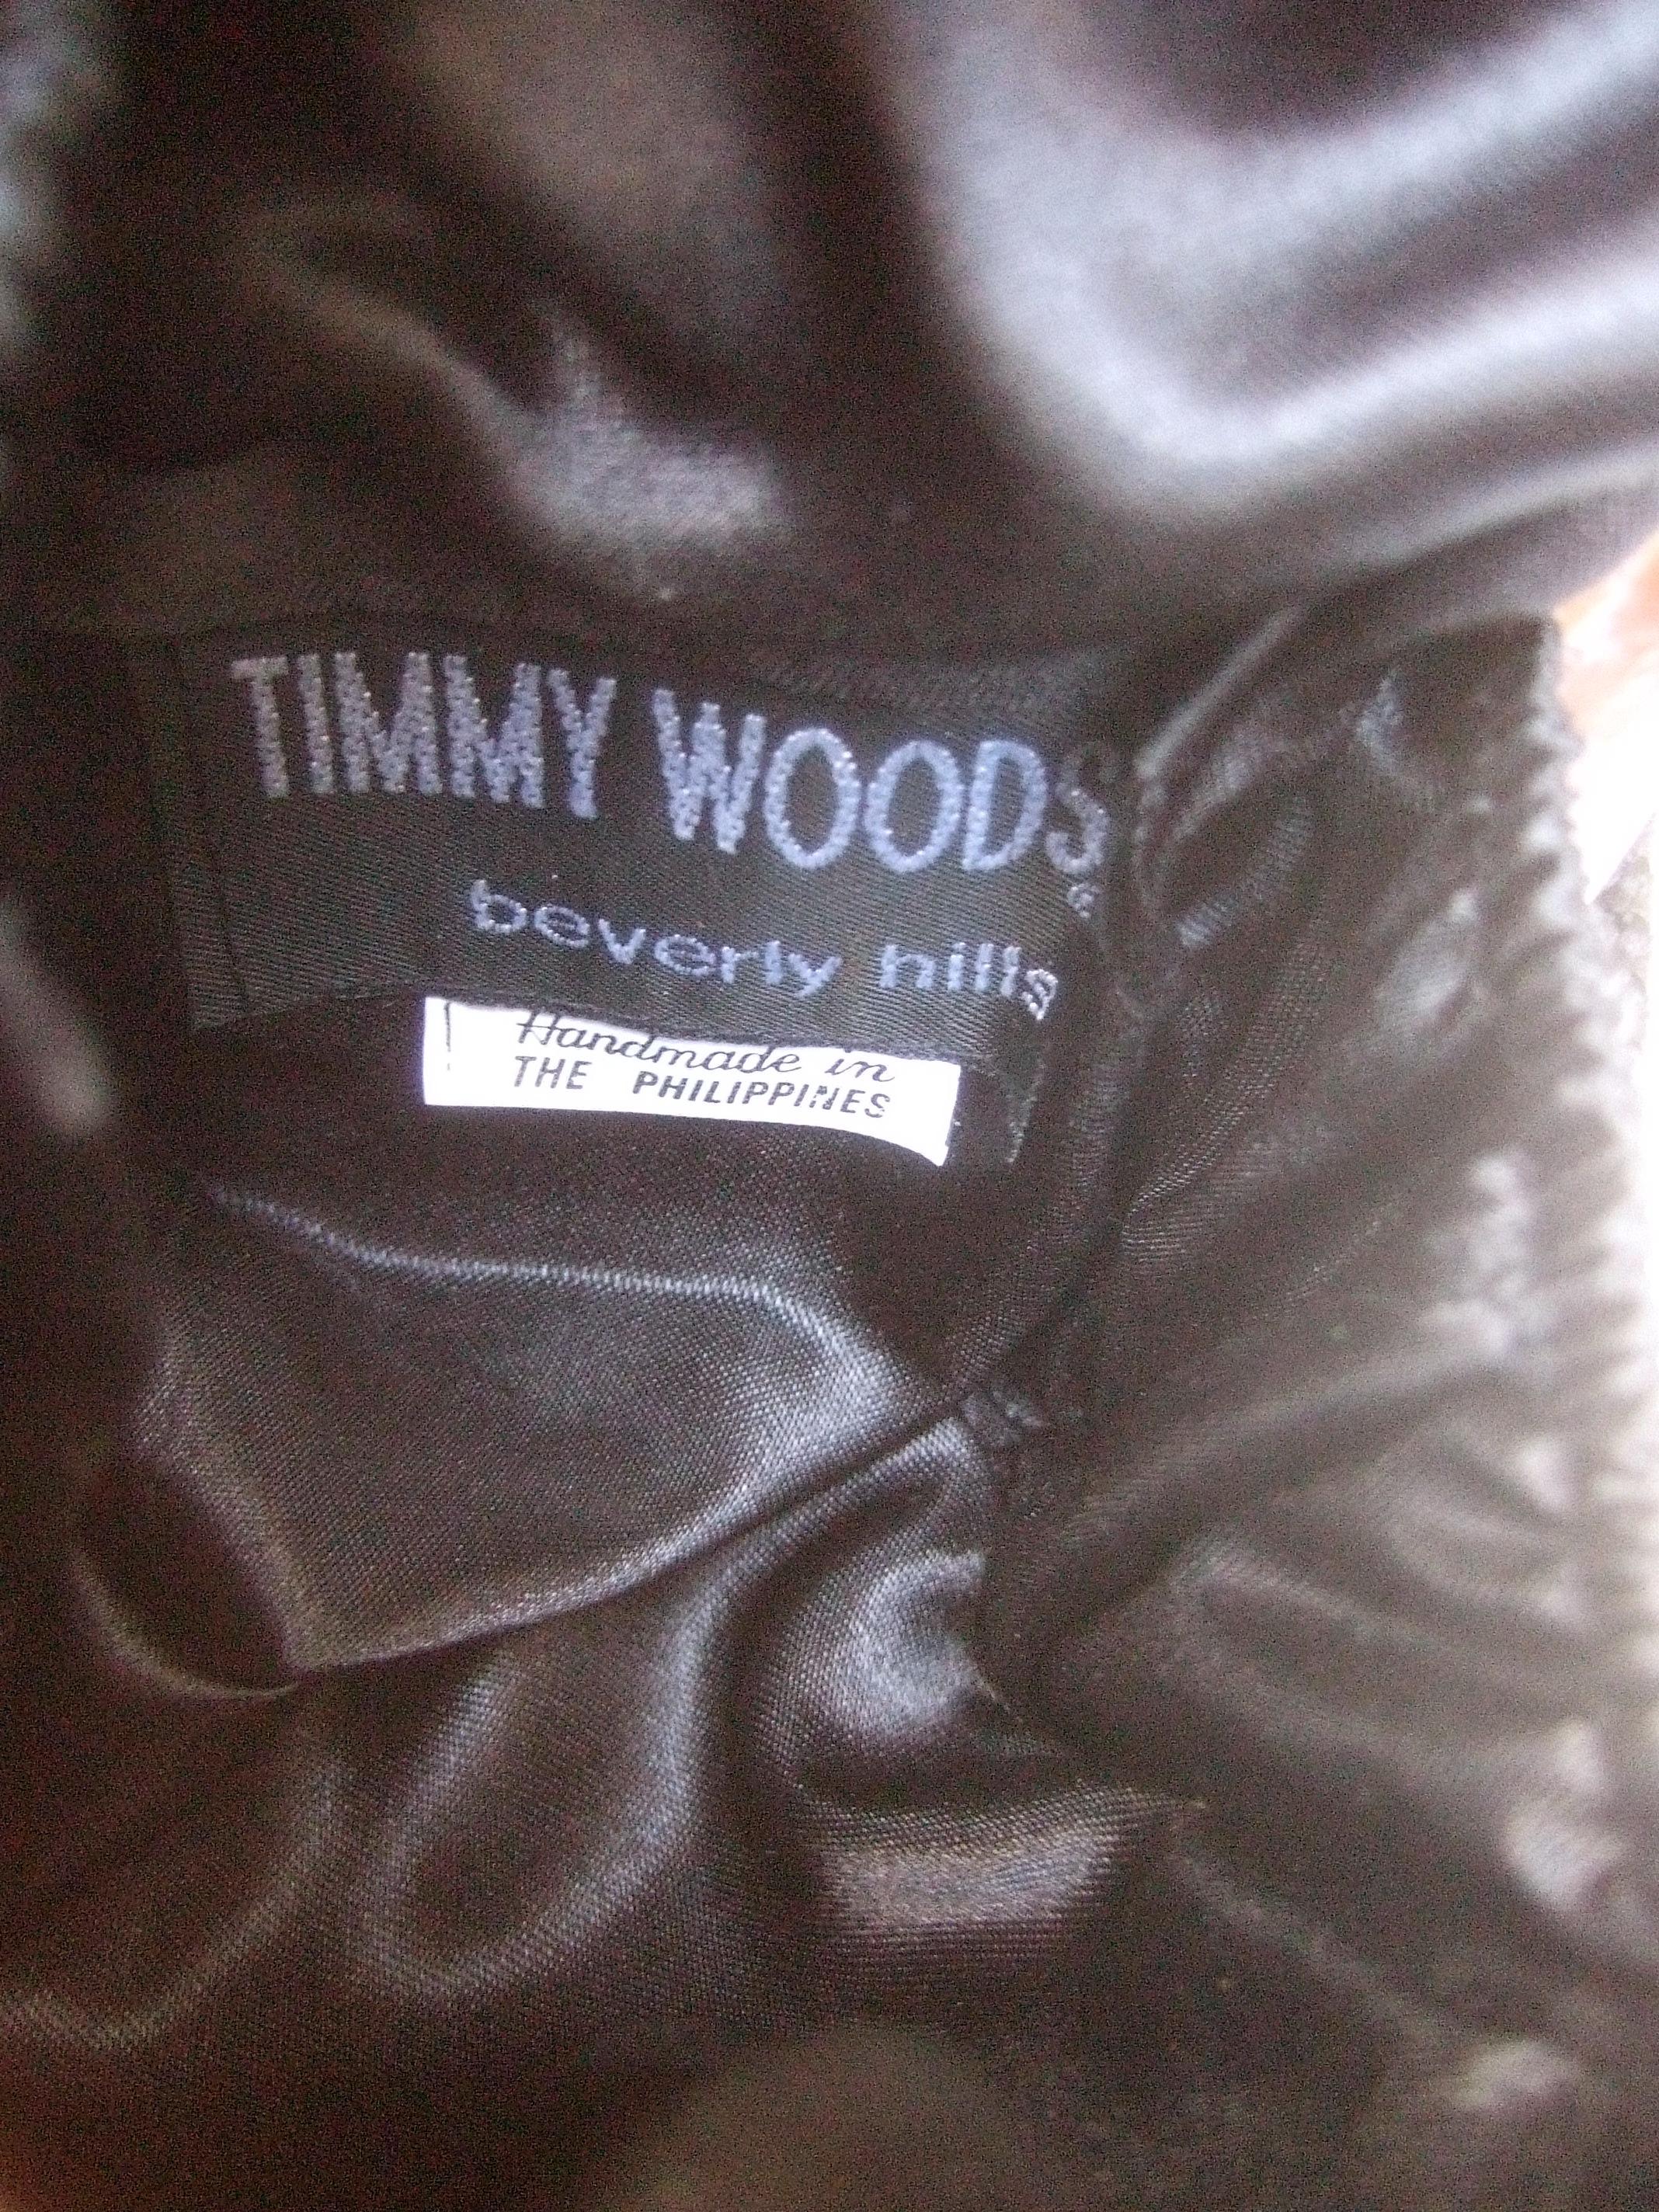 Timmy Woods Beverly Hills Carved Wood Equine Shoulder Bag Circa 1990s 8